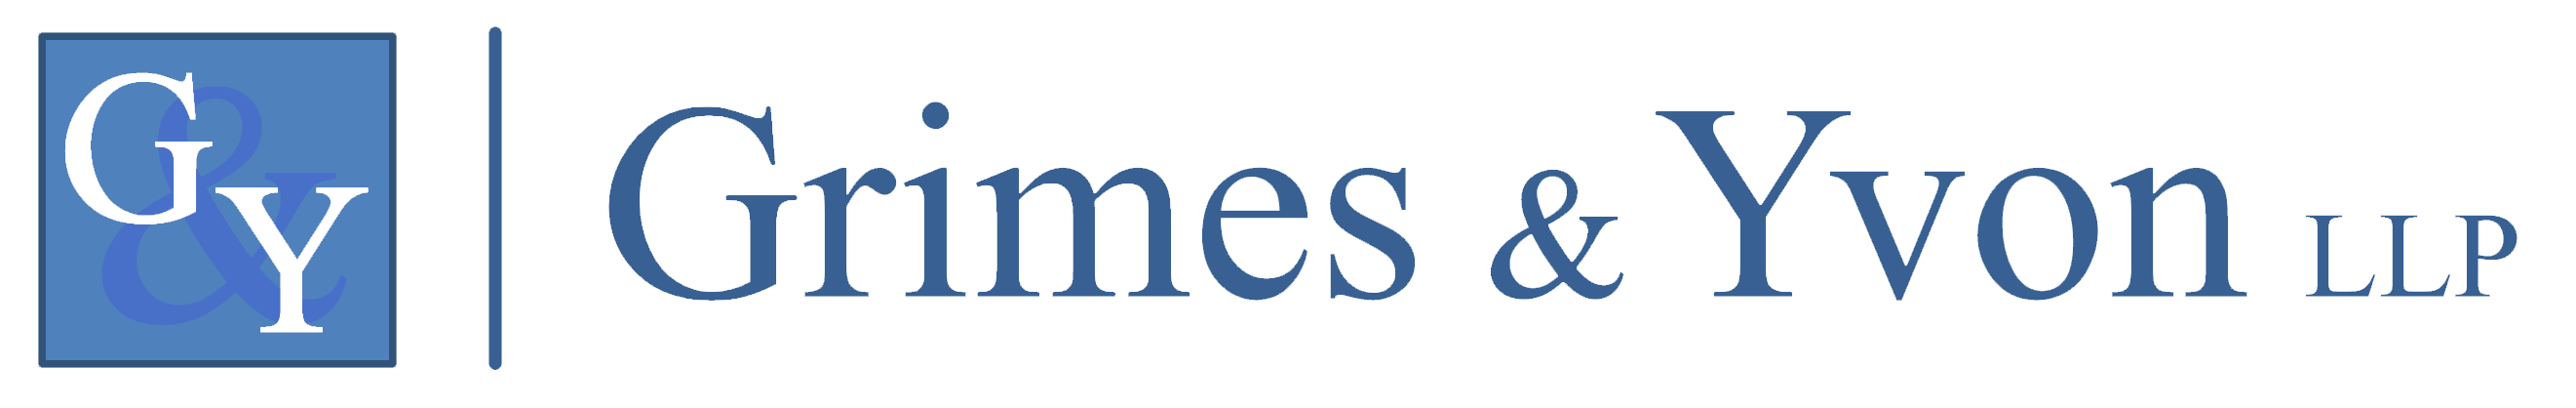 Grimes & Yvon LLP | New York Patent Attorneys